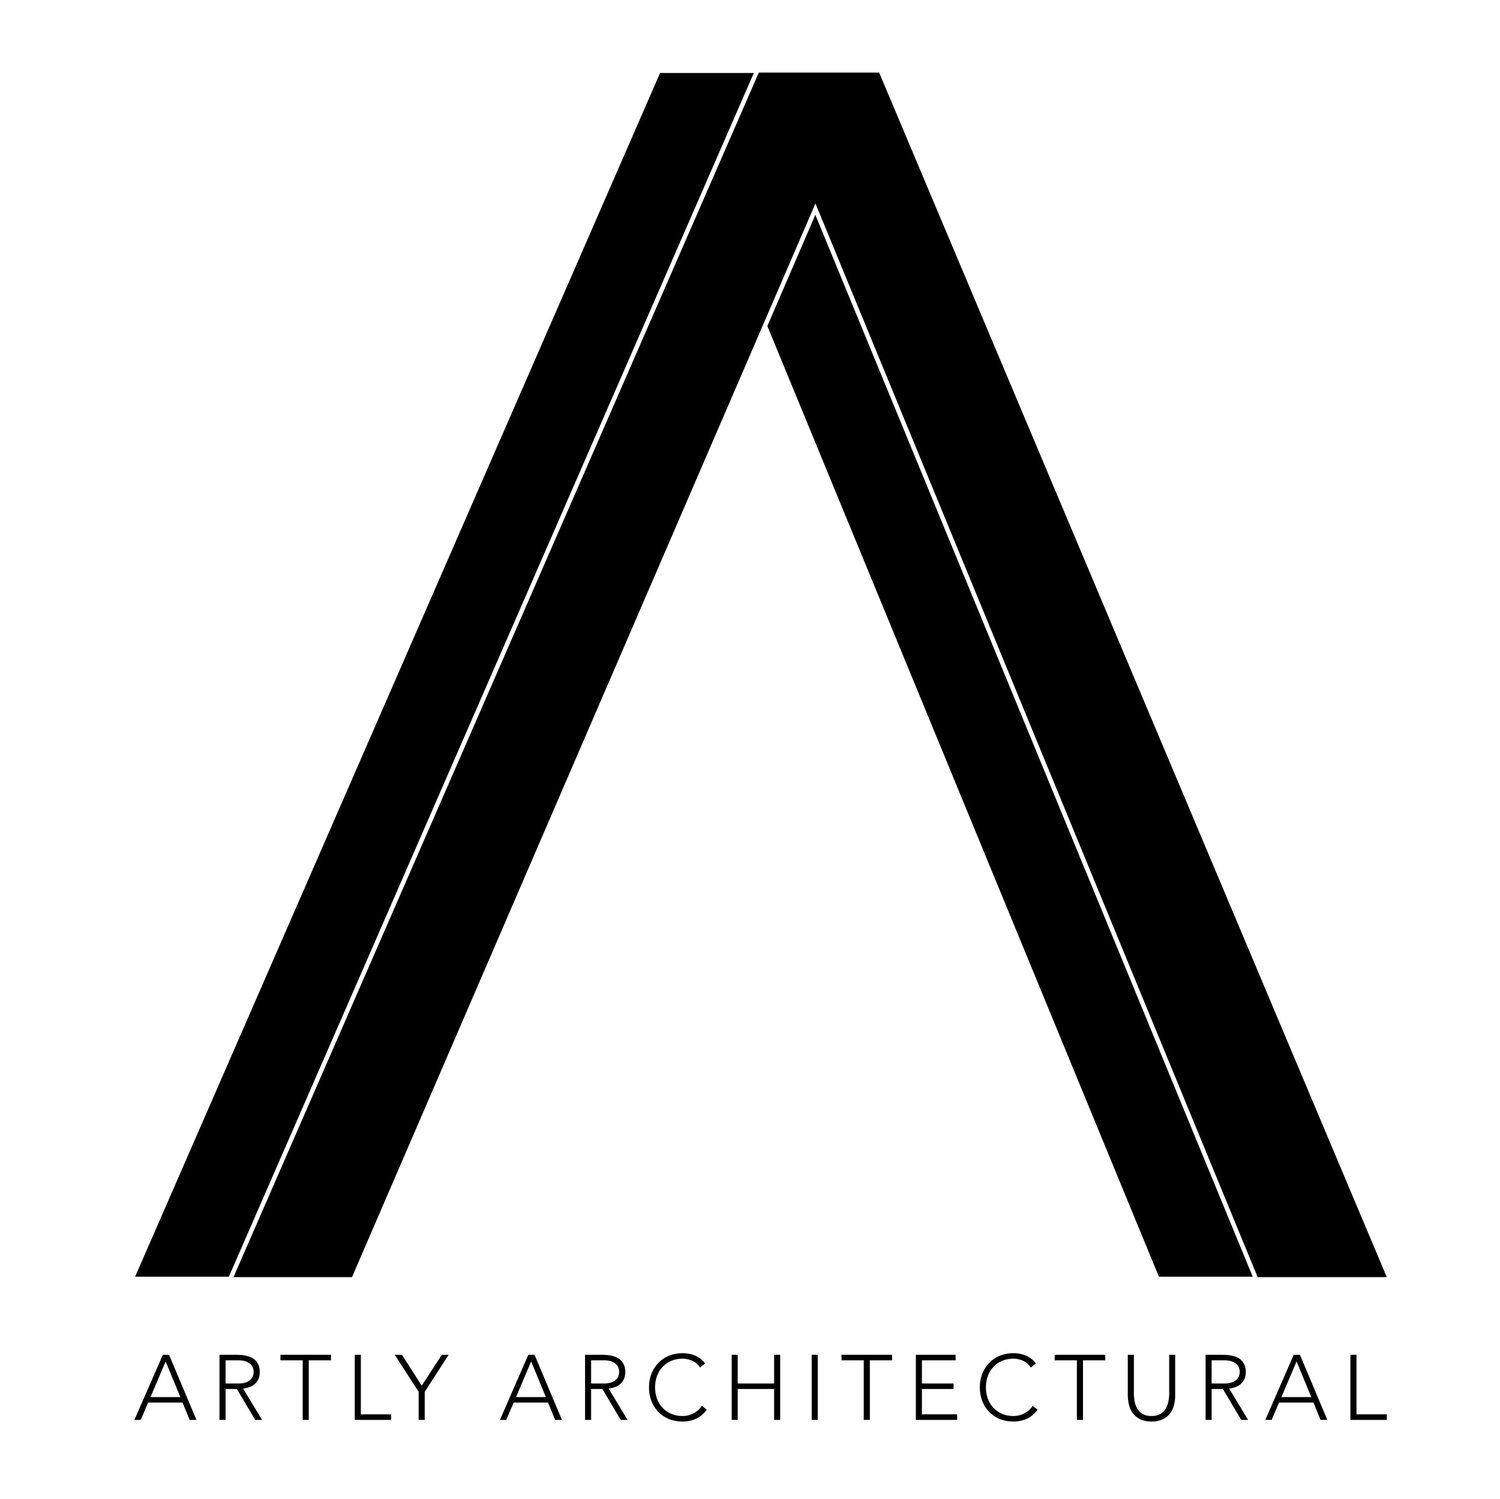 Art in Architecture